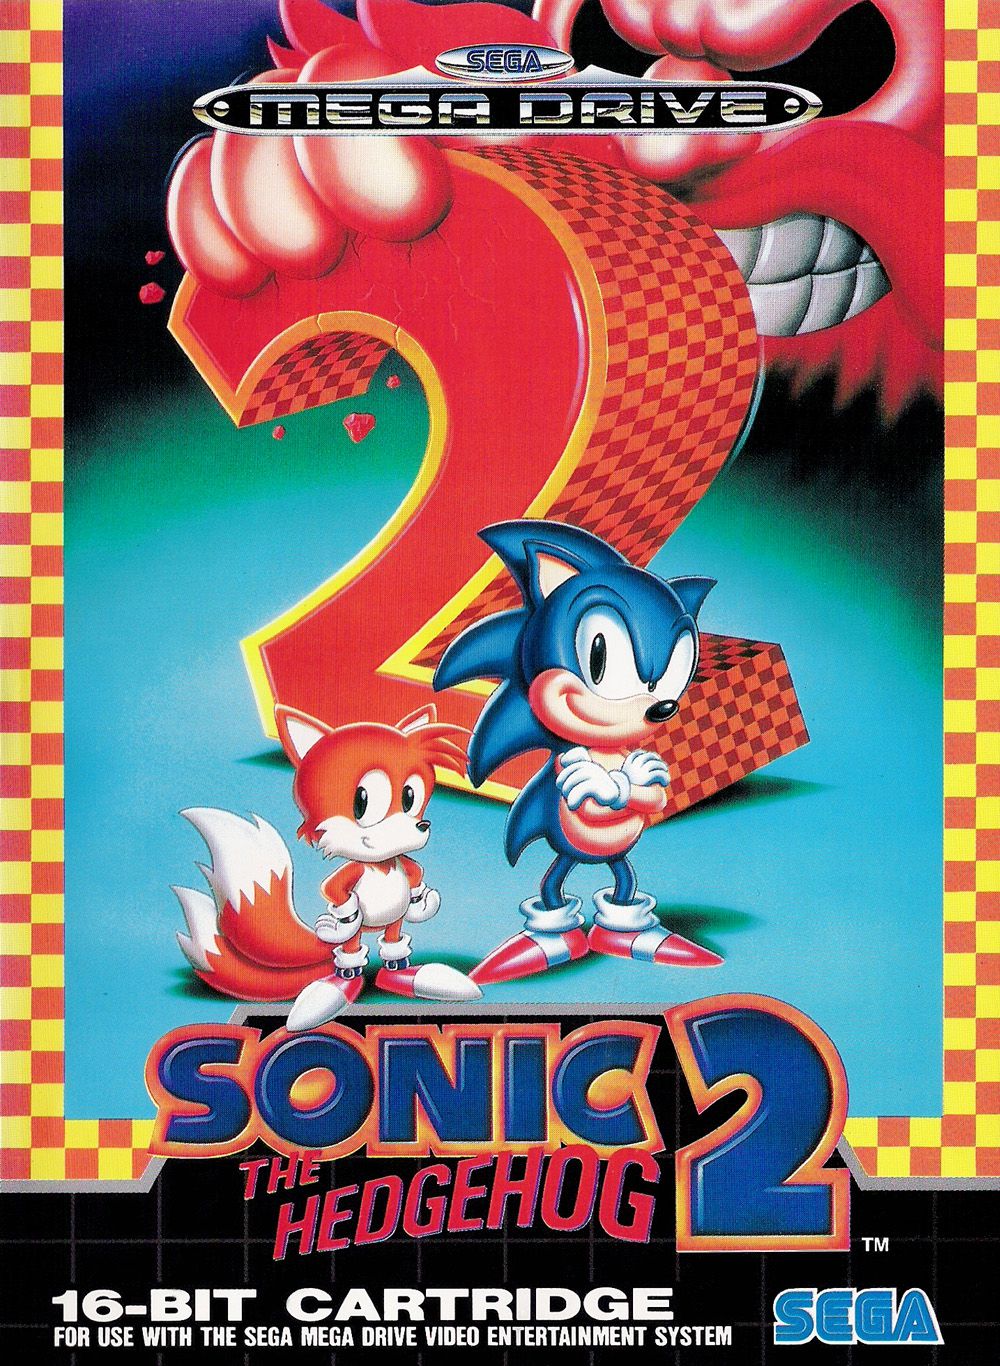 Voir Film Sonic the Hedgehog 2 (1992)  - Jeu vidéo streaming VF gratuit complet